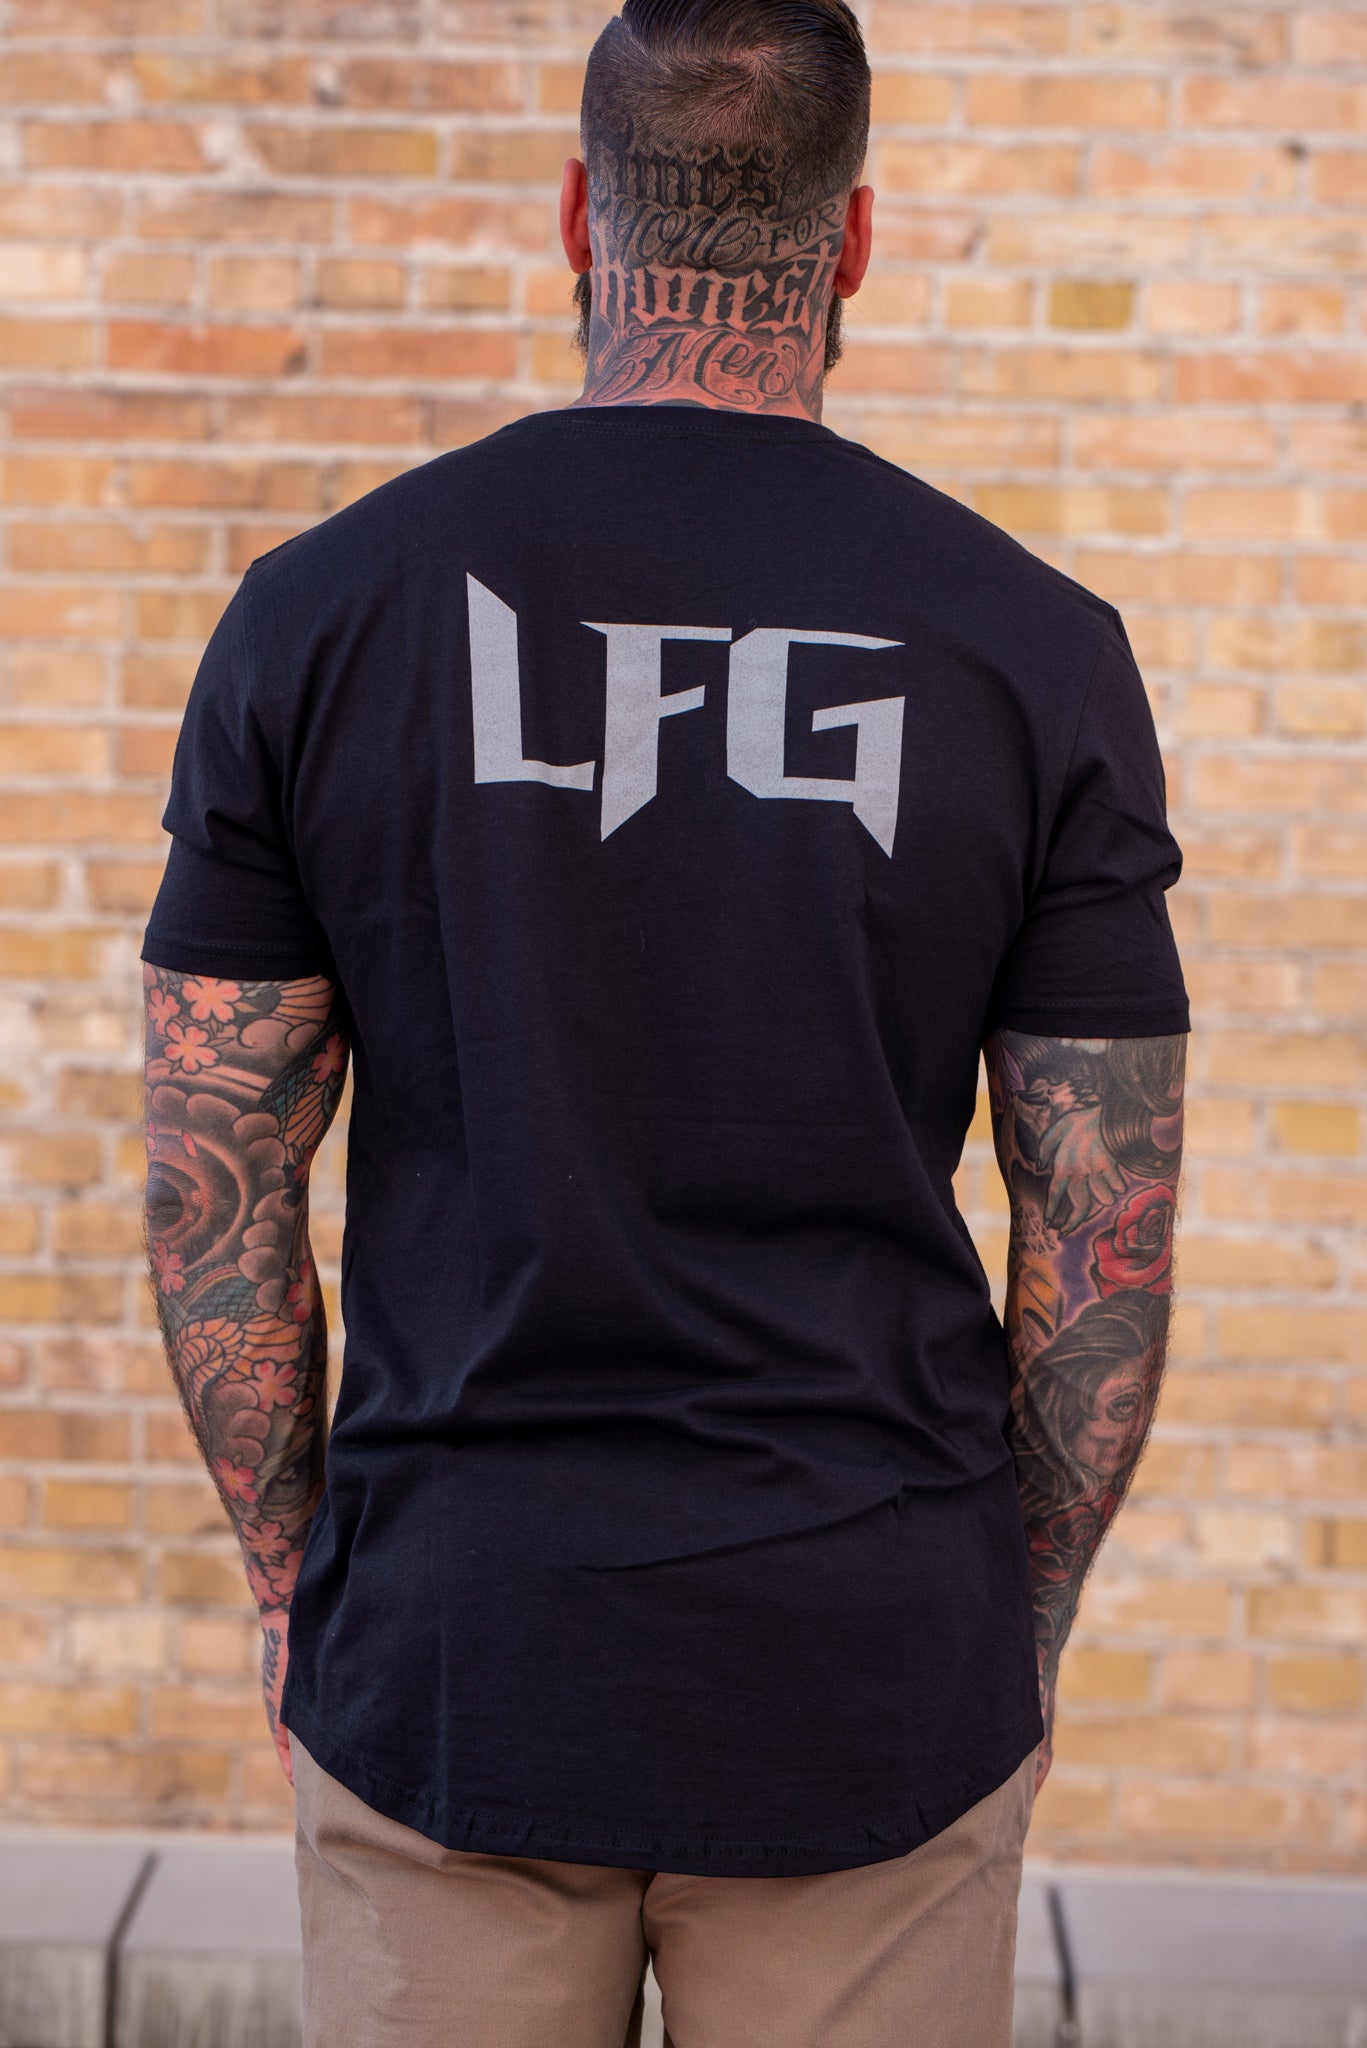 LFG Men's Scoop Bottom T-shirt